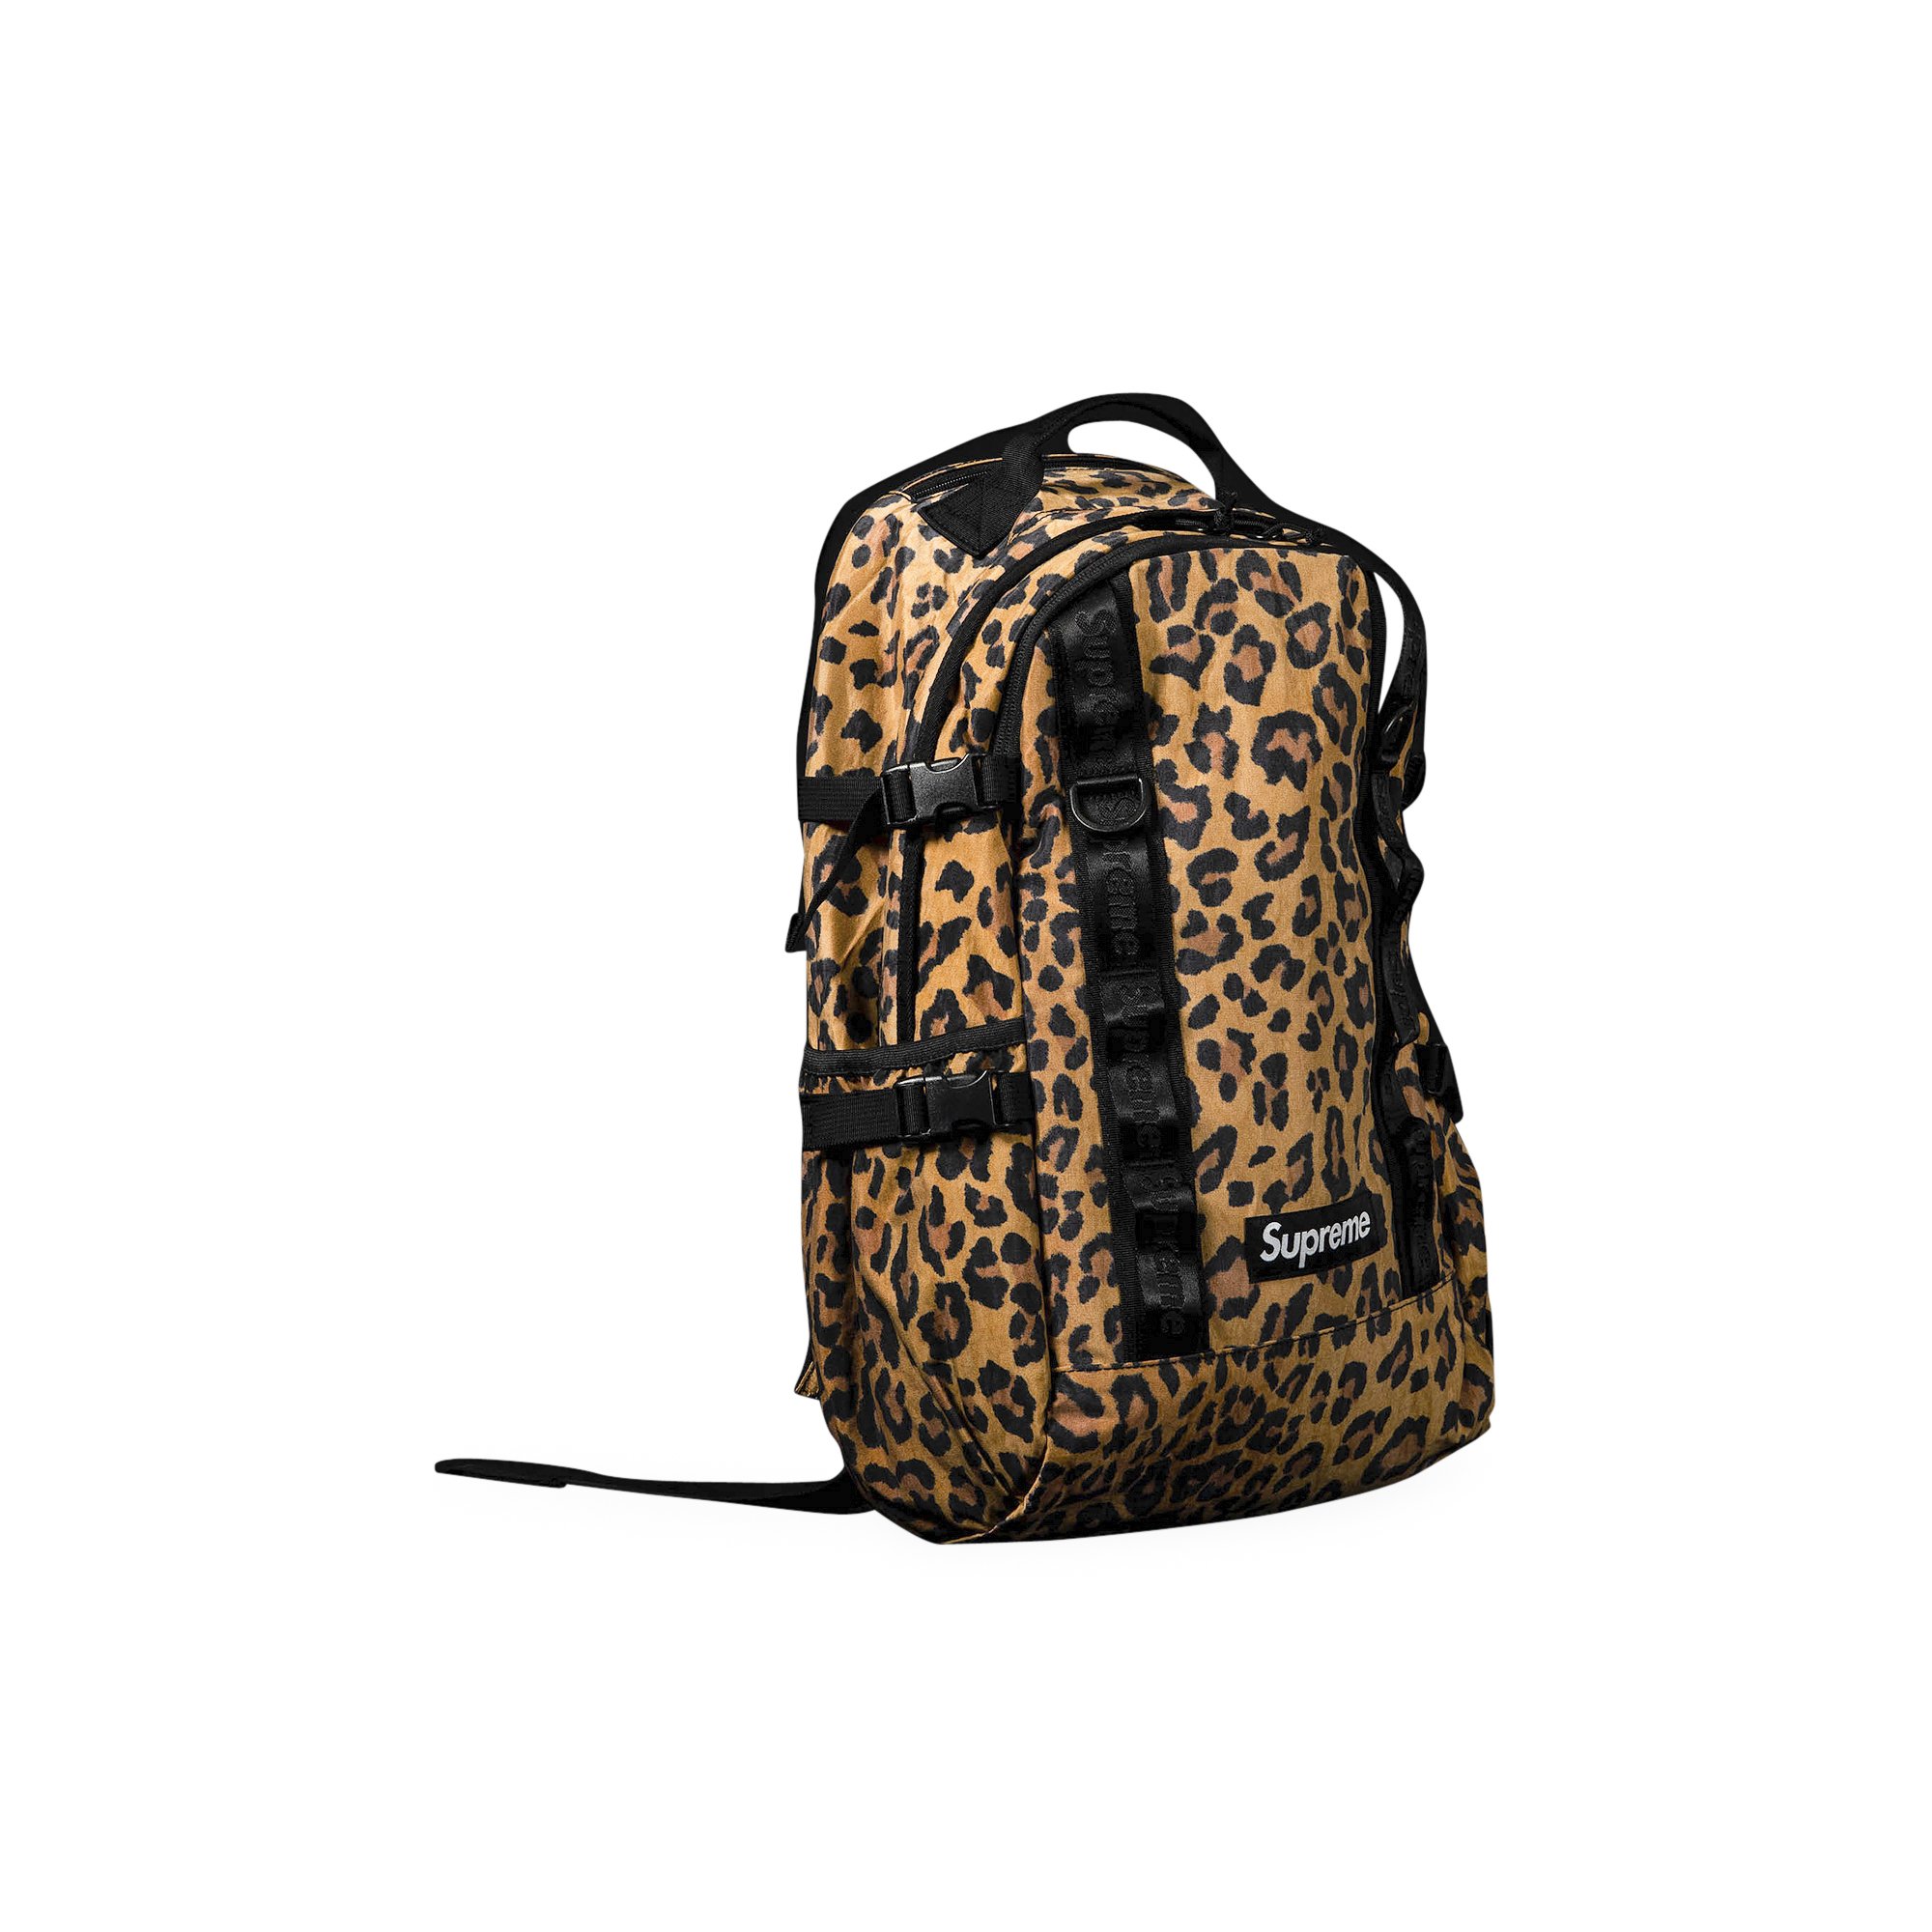 Buy Supreme Backpack 'Leopard' - FW20B8 LEOPARD | GOAT